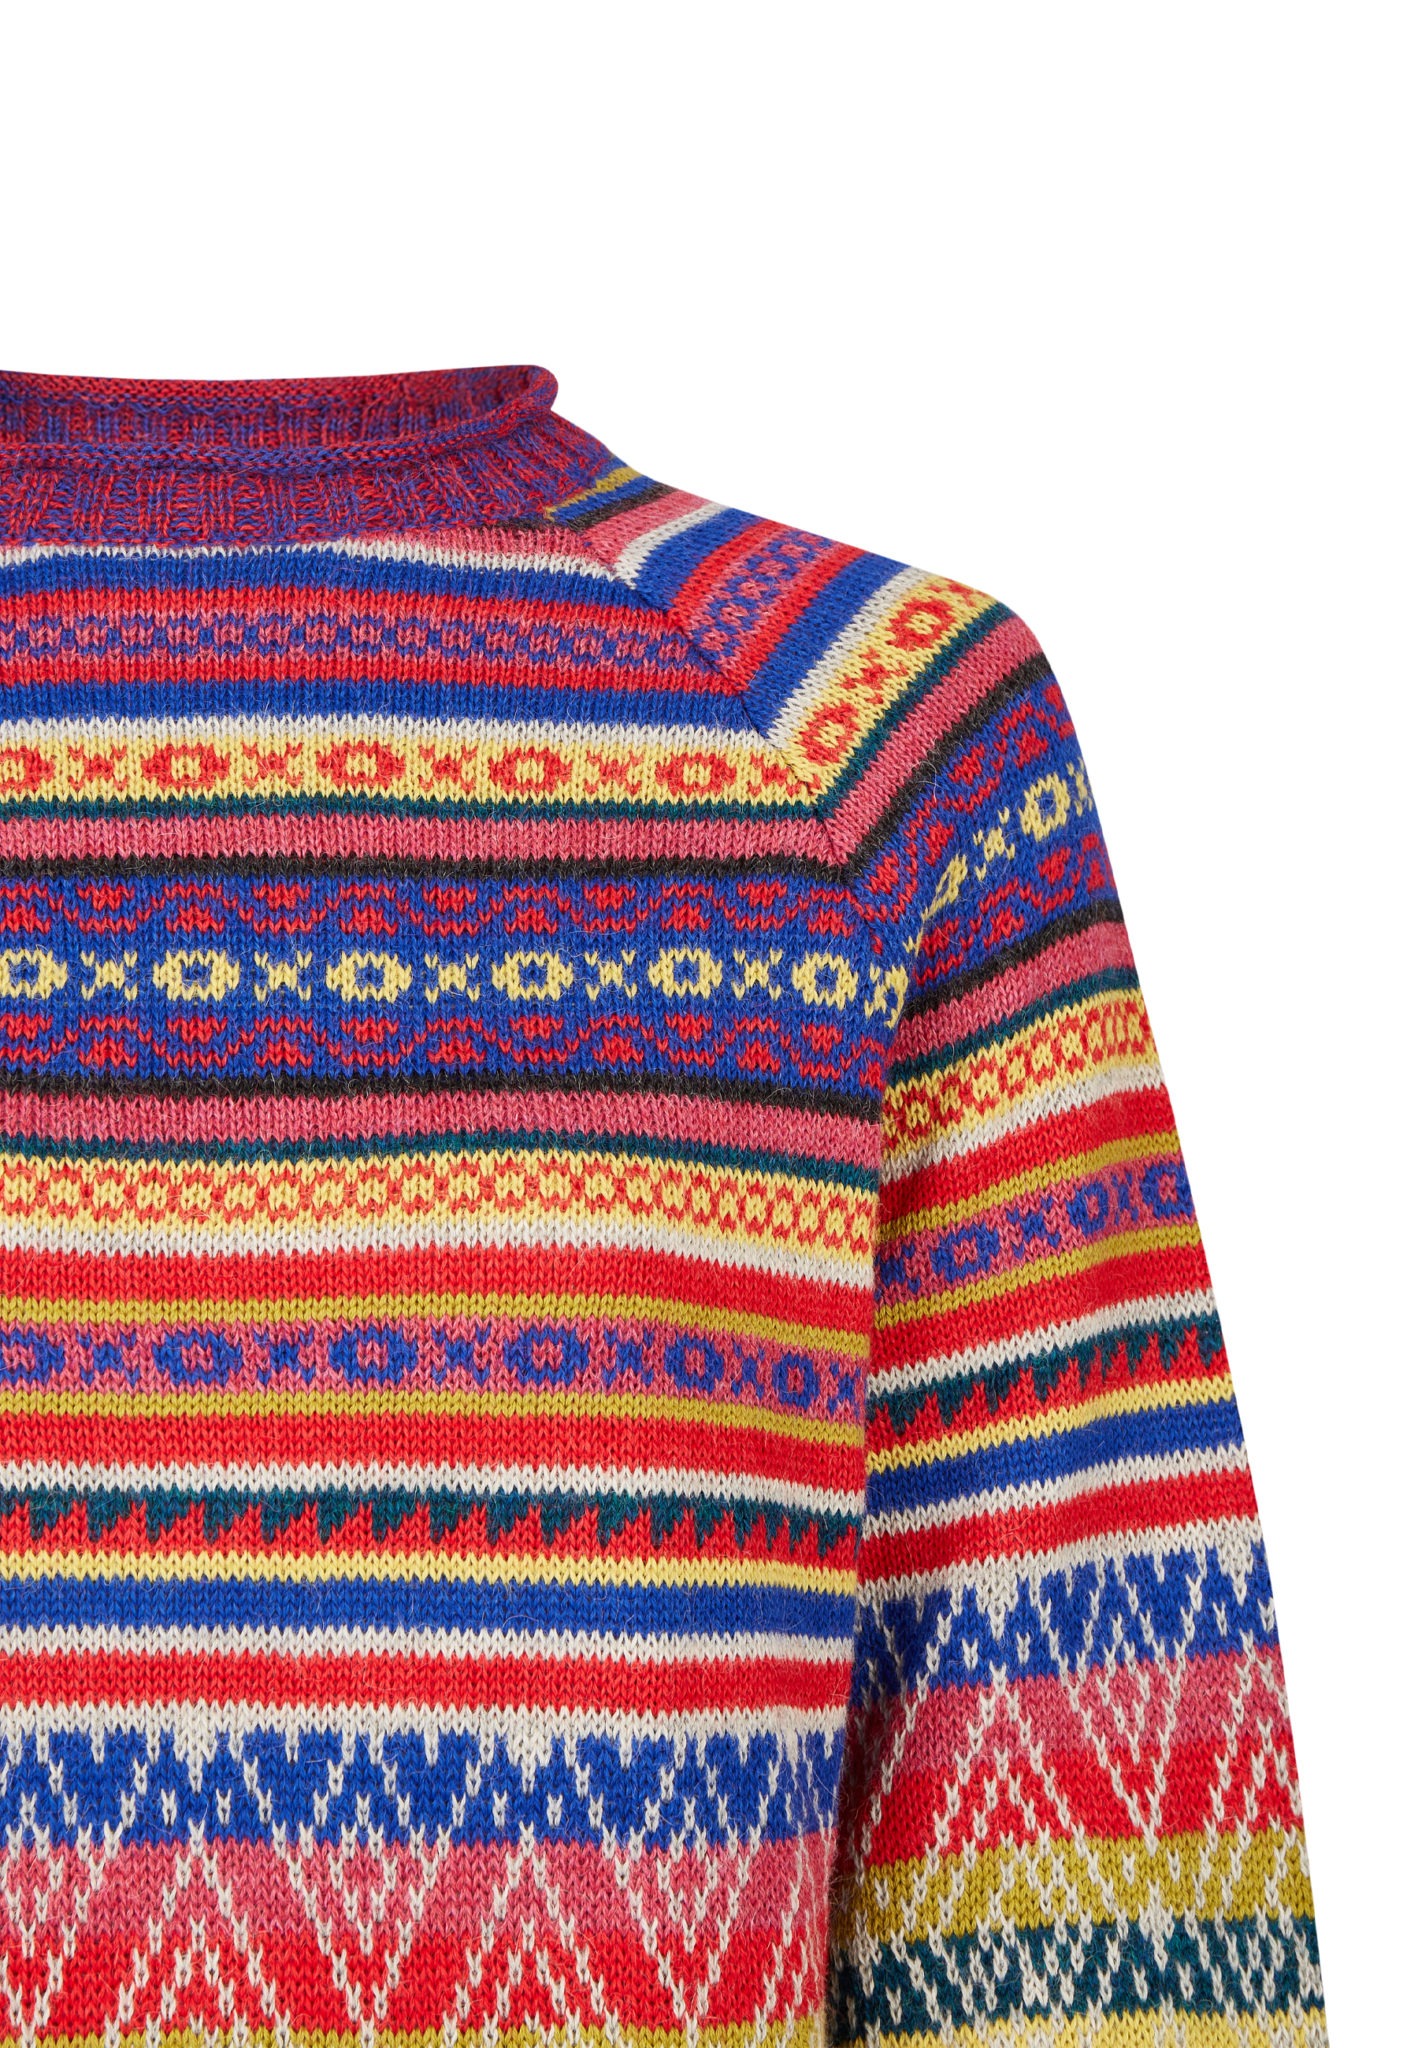 Z_Cuzco_Sweater_2